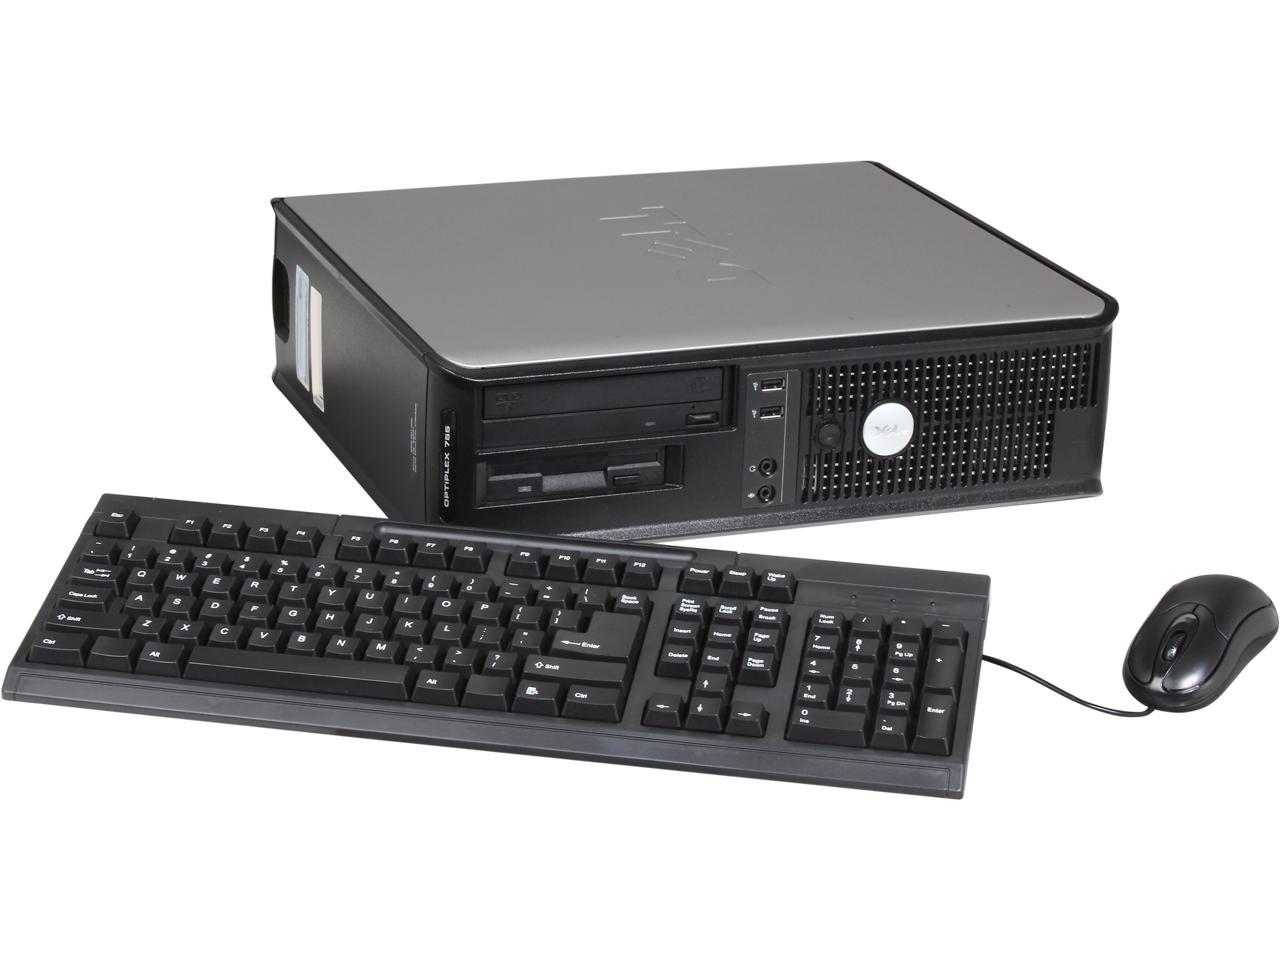 DELL Desktop PC OptiPlex 755 Core 2 Duo 2.66 GHz 4 GB 250 GB HDD Intel HD Graphics Windows 10 Pro 64-Bit